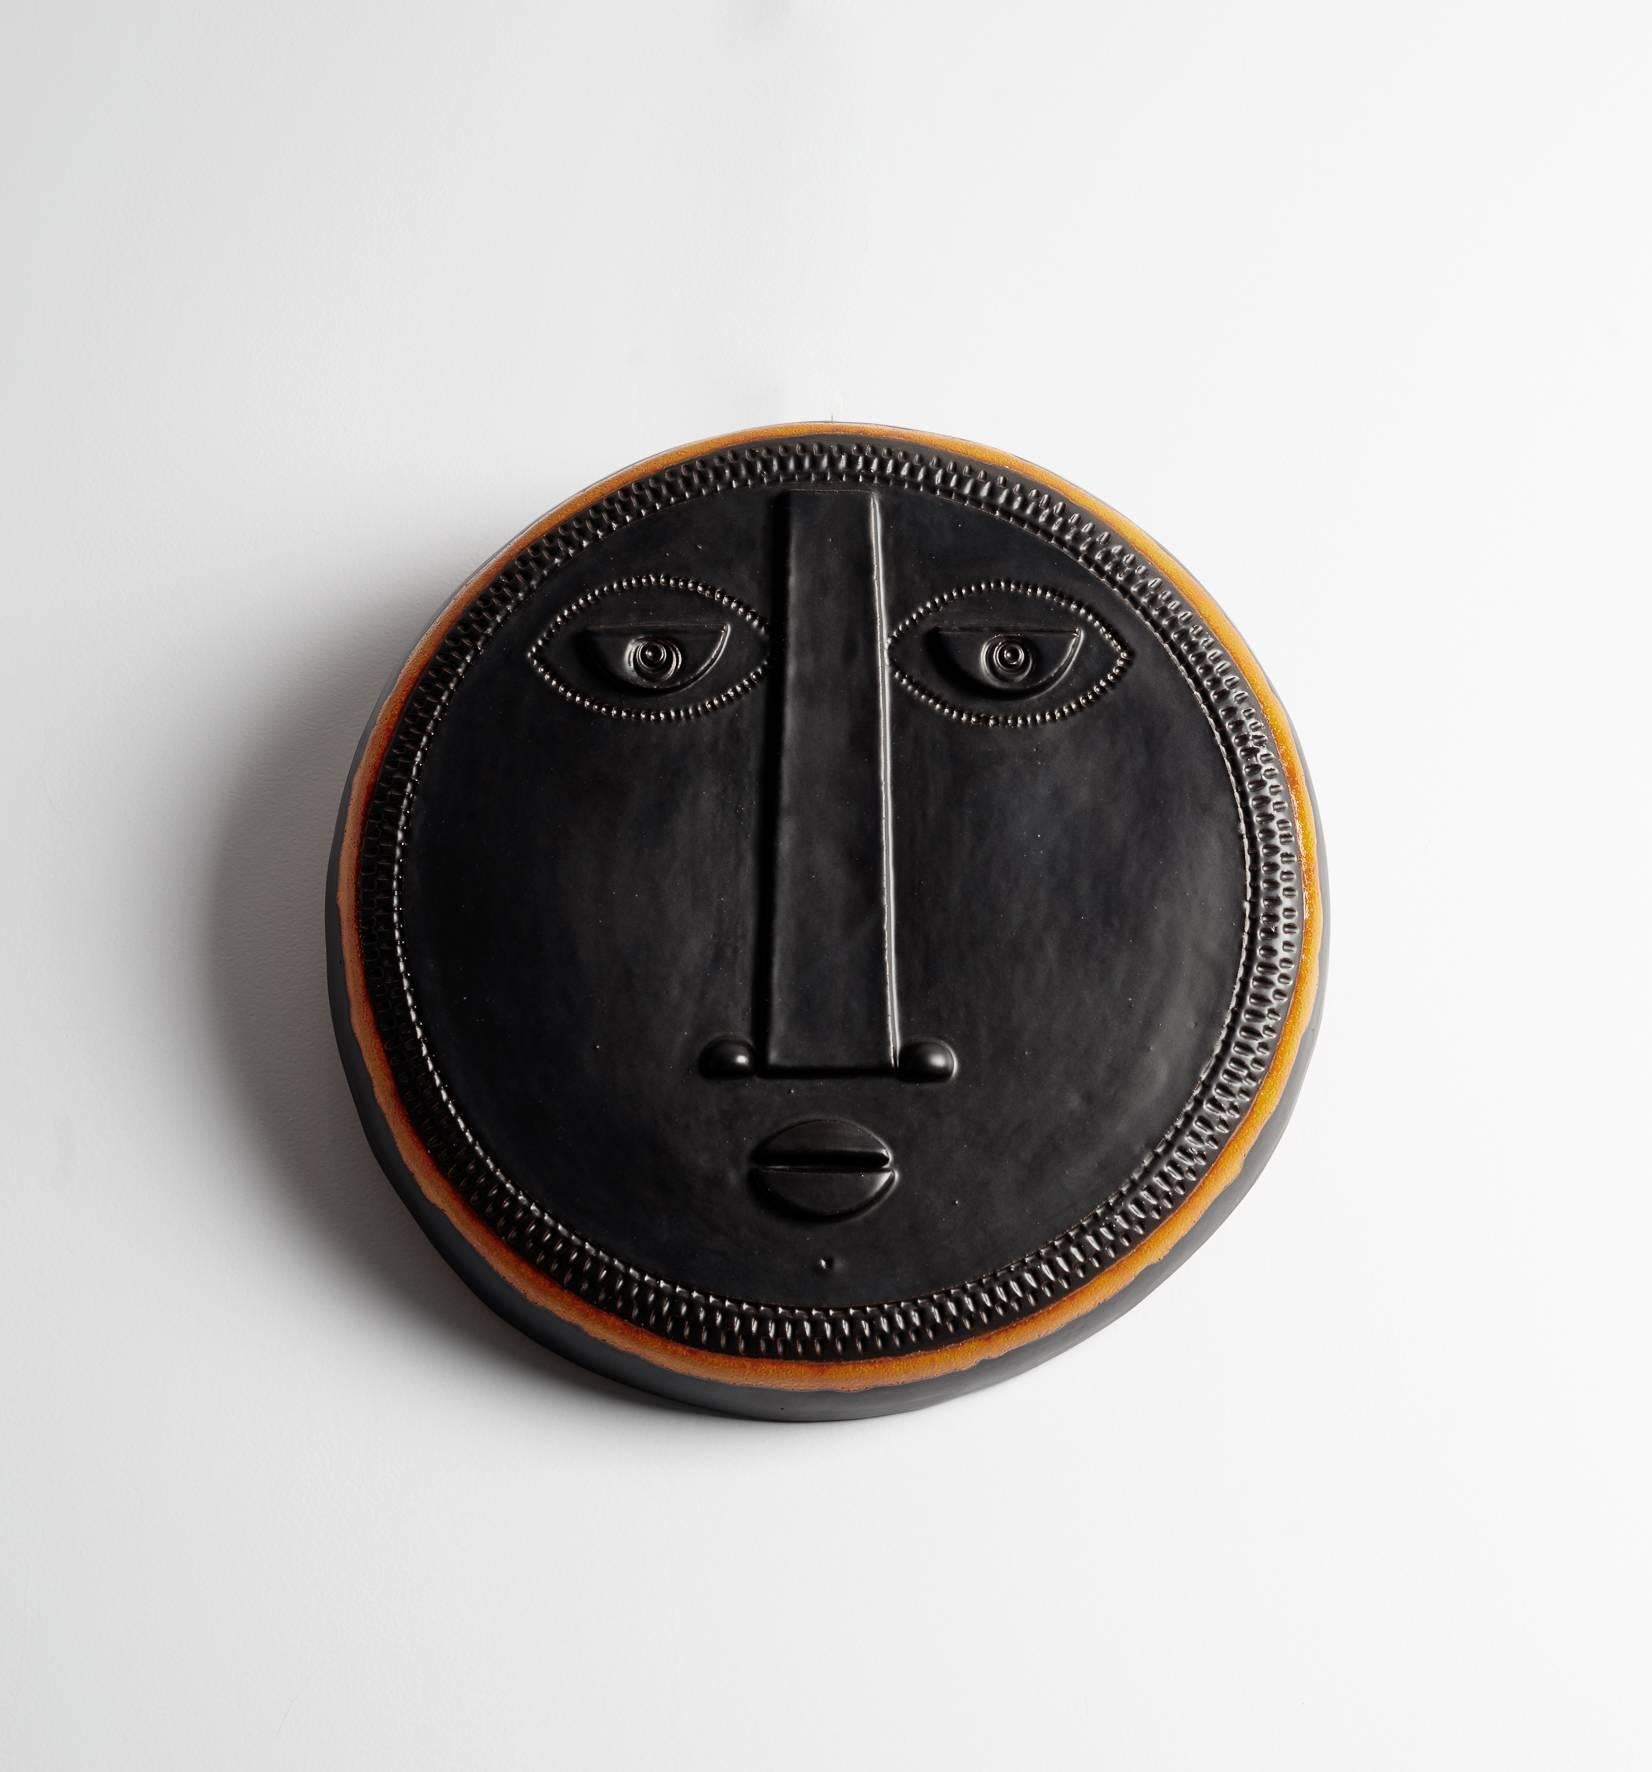 Decorative black ceramic mask with stylized face and shiny orange enamel around, creation 2017, unique piece by French ceramists Dalo.